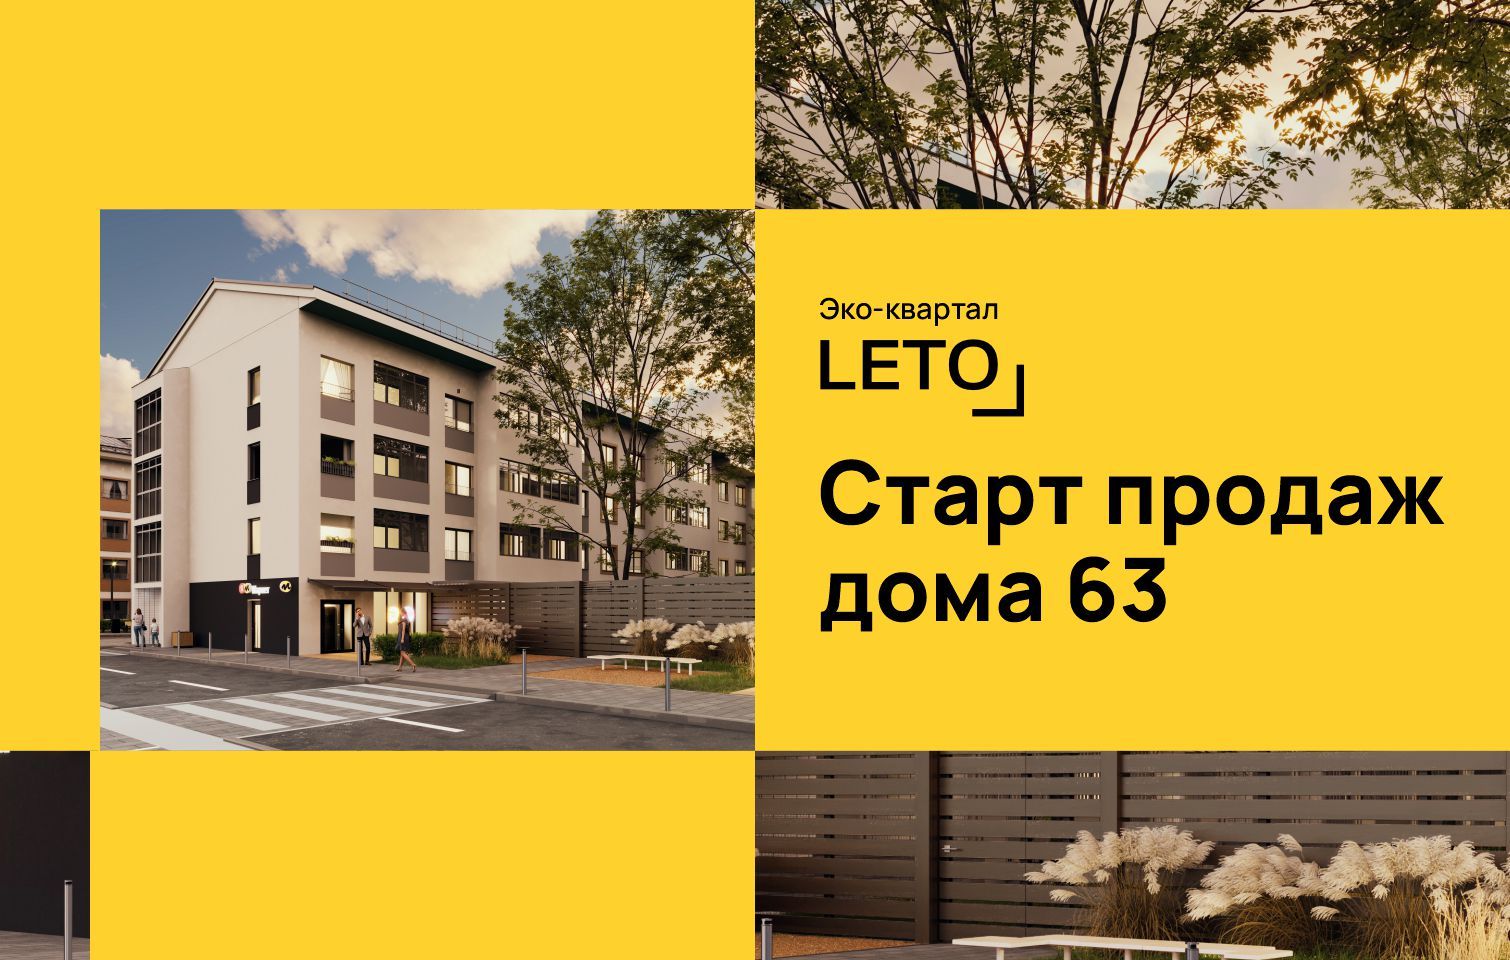 Старт продаж нового дома 63 в эко-квартале LETO